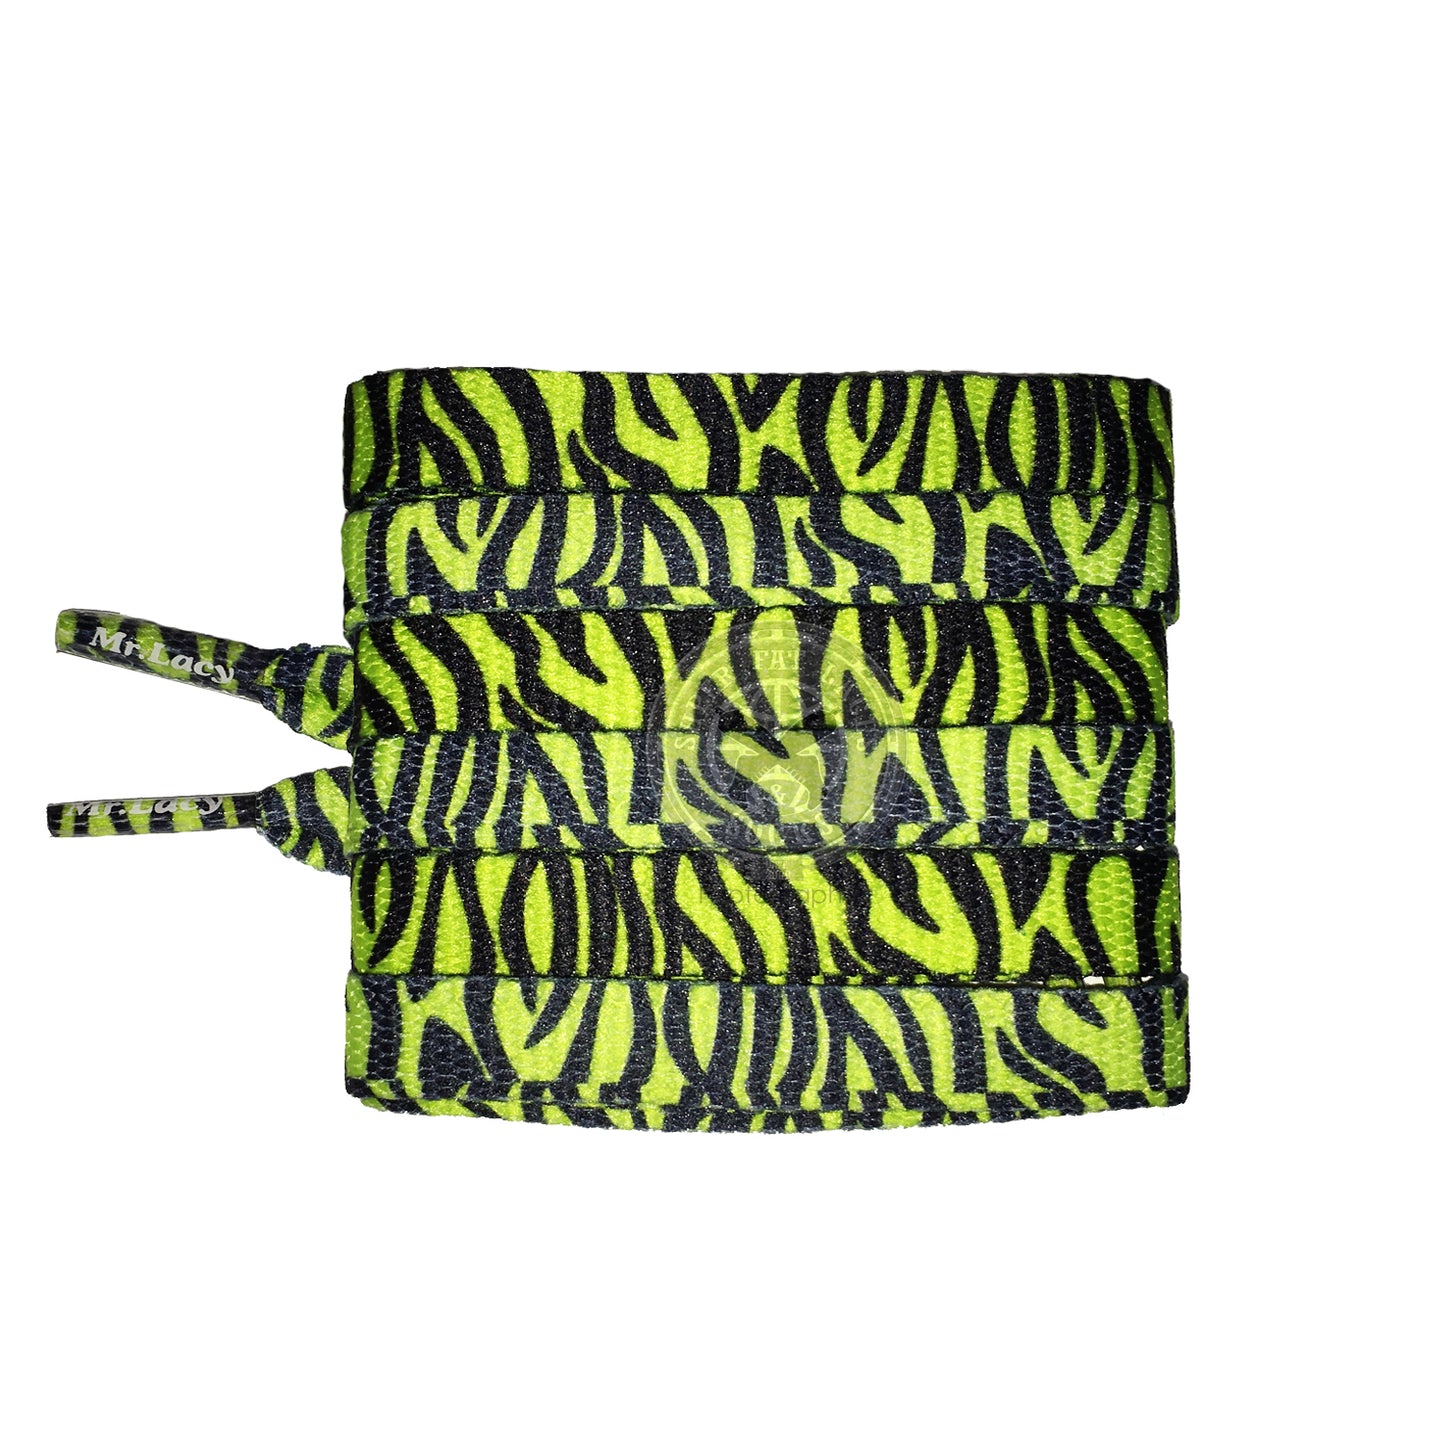 Mr Lacy Printies - Neon Lime Yellow Zebra Shoelaces